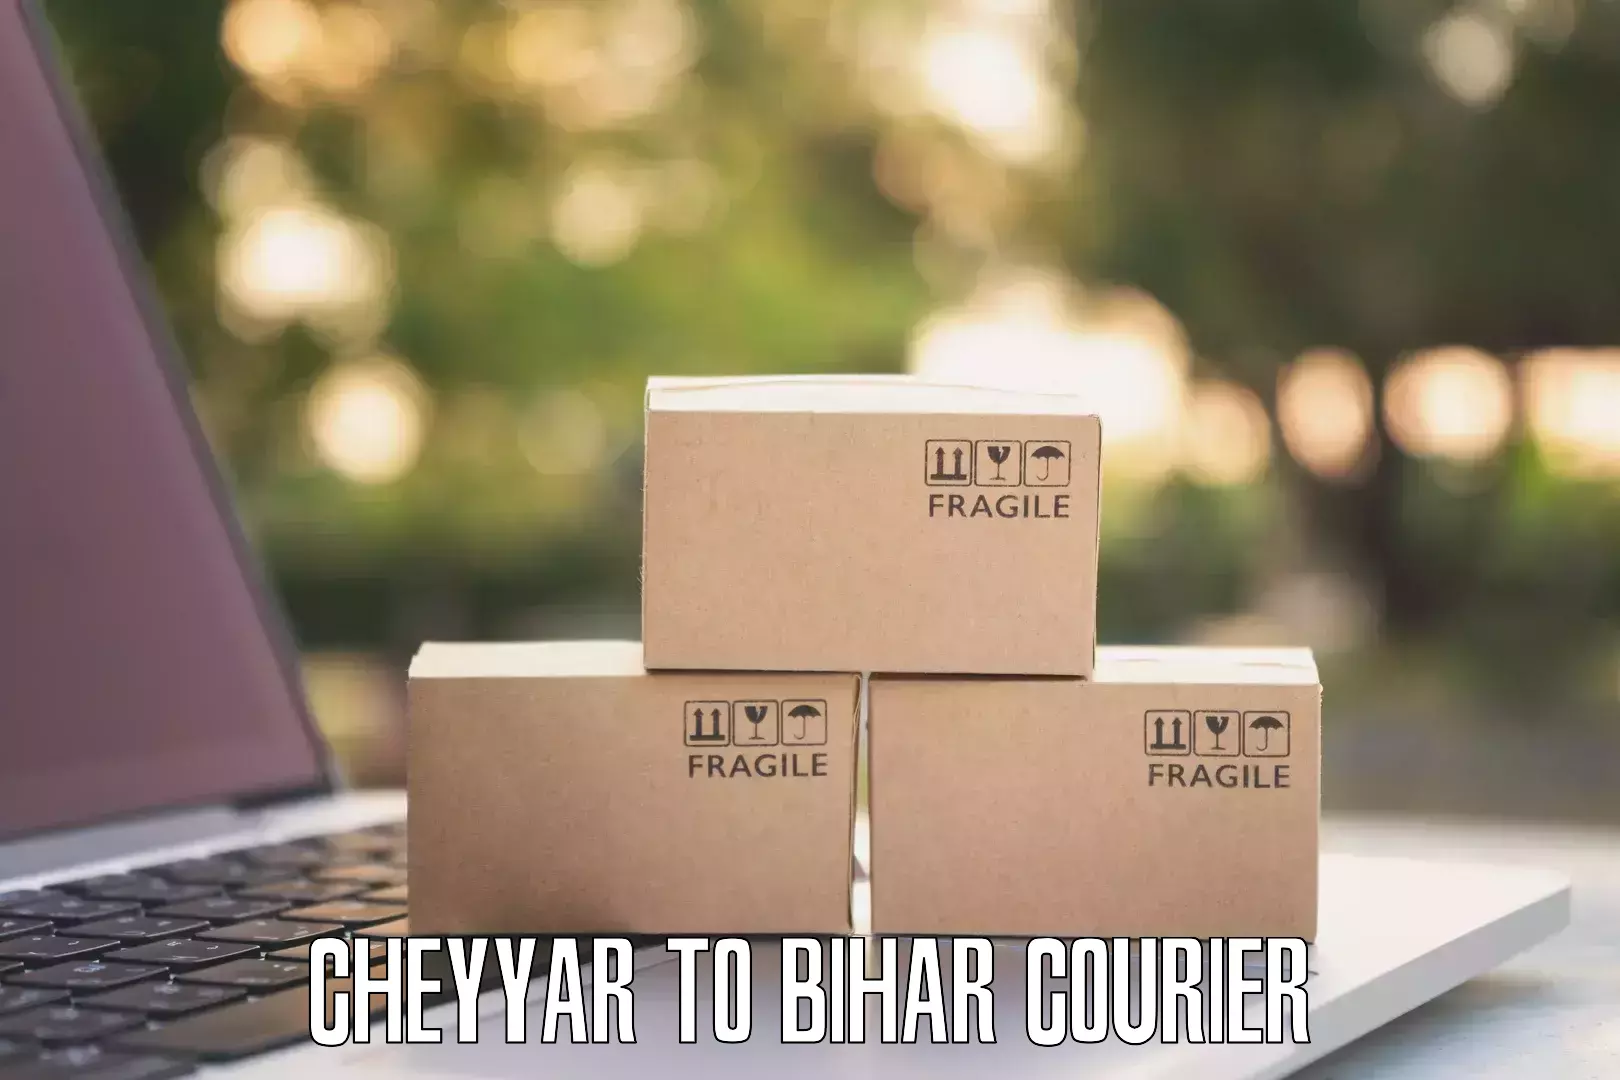 Courier service efficiency Cheyyar to Bihar